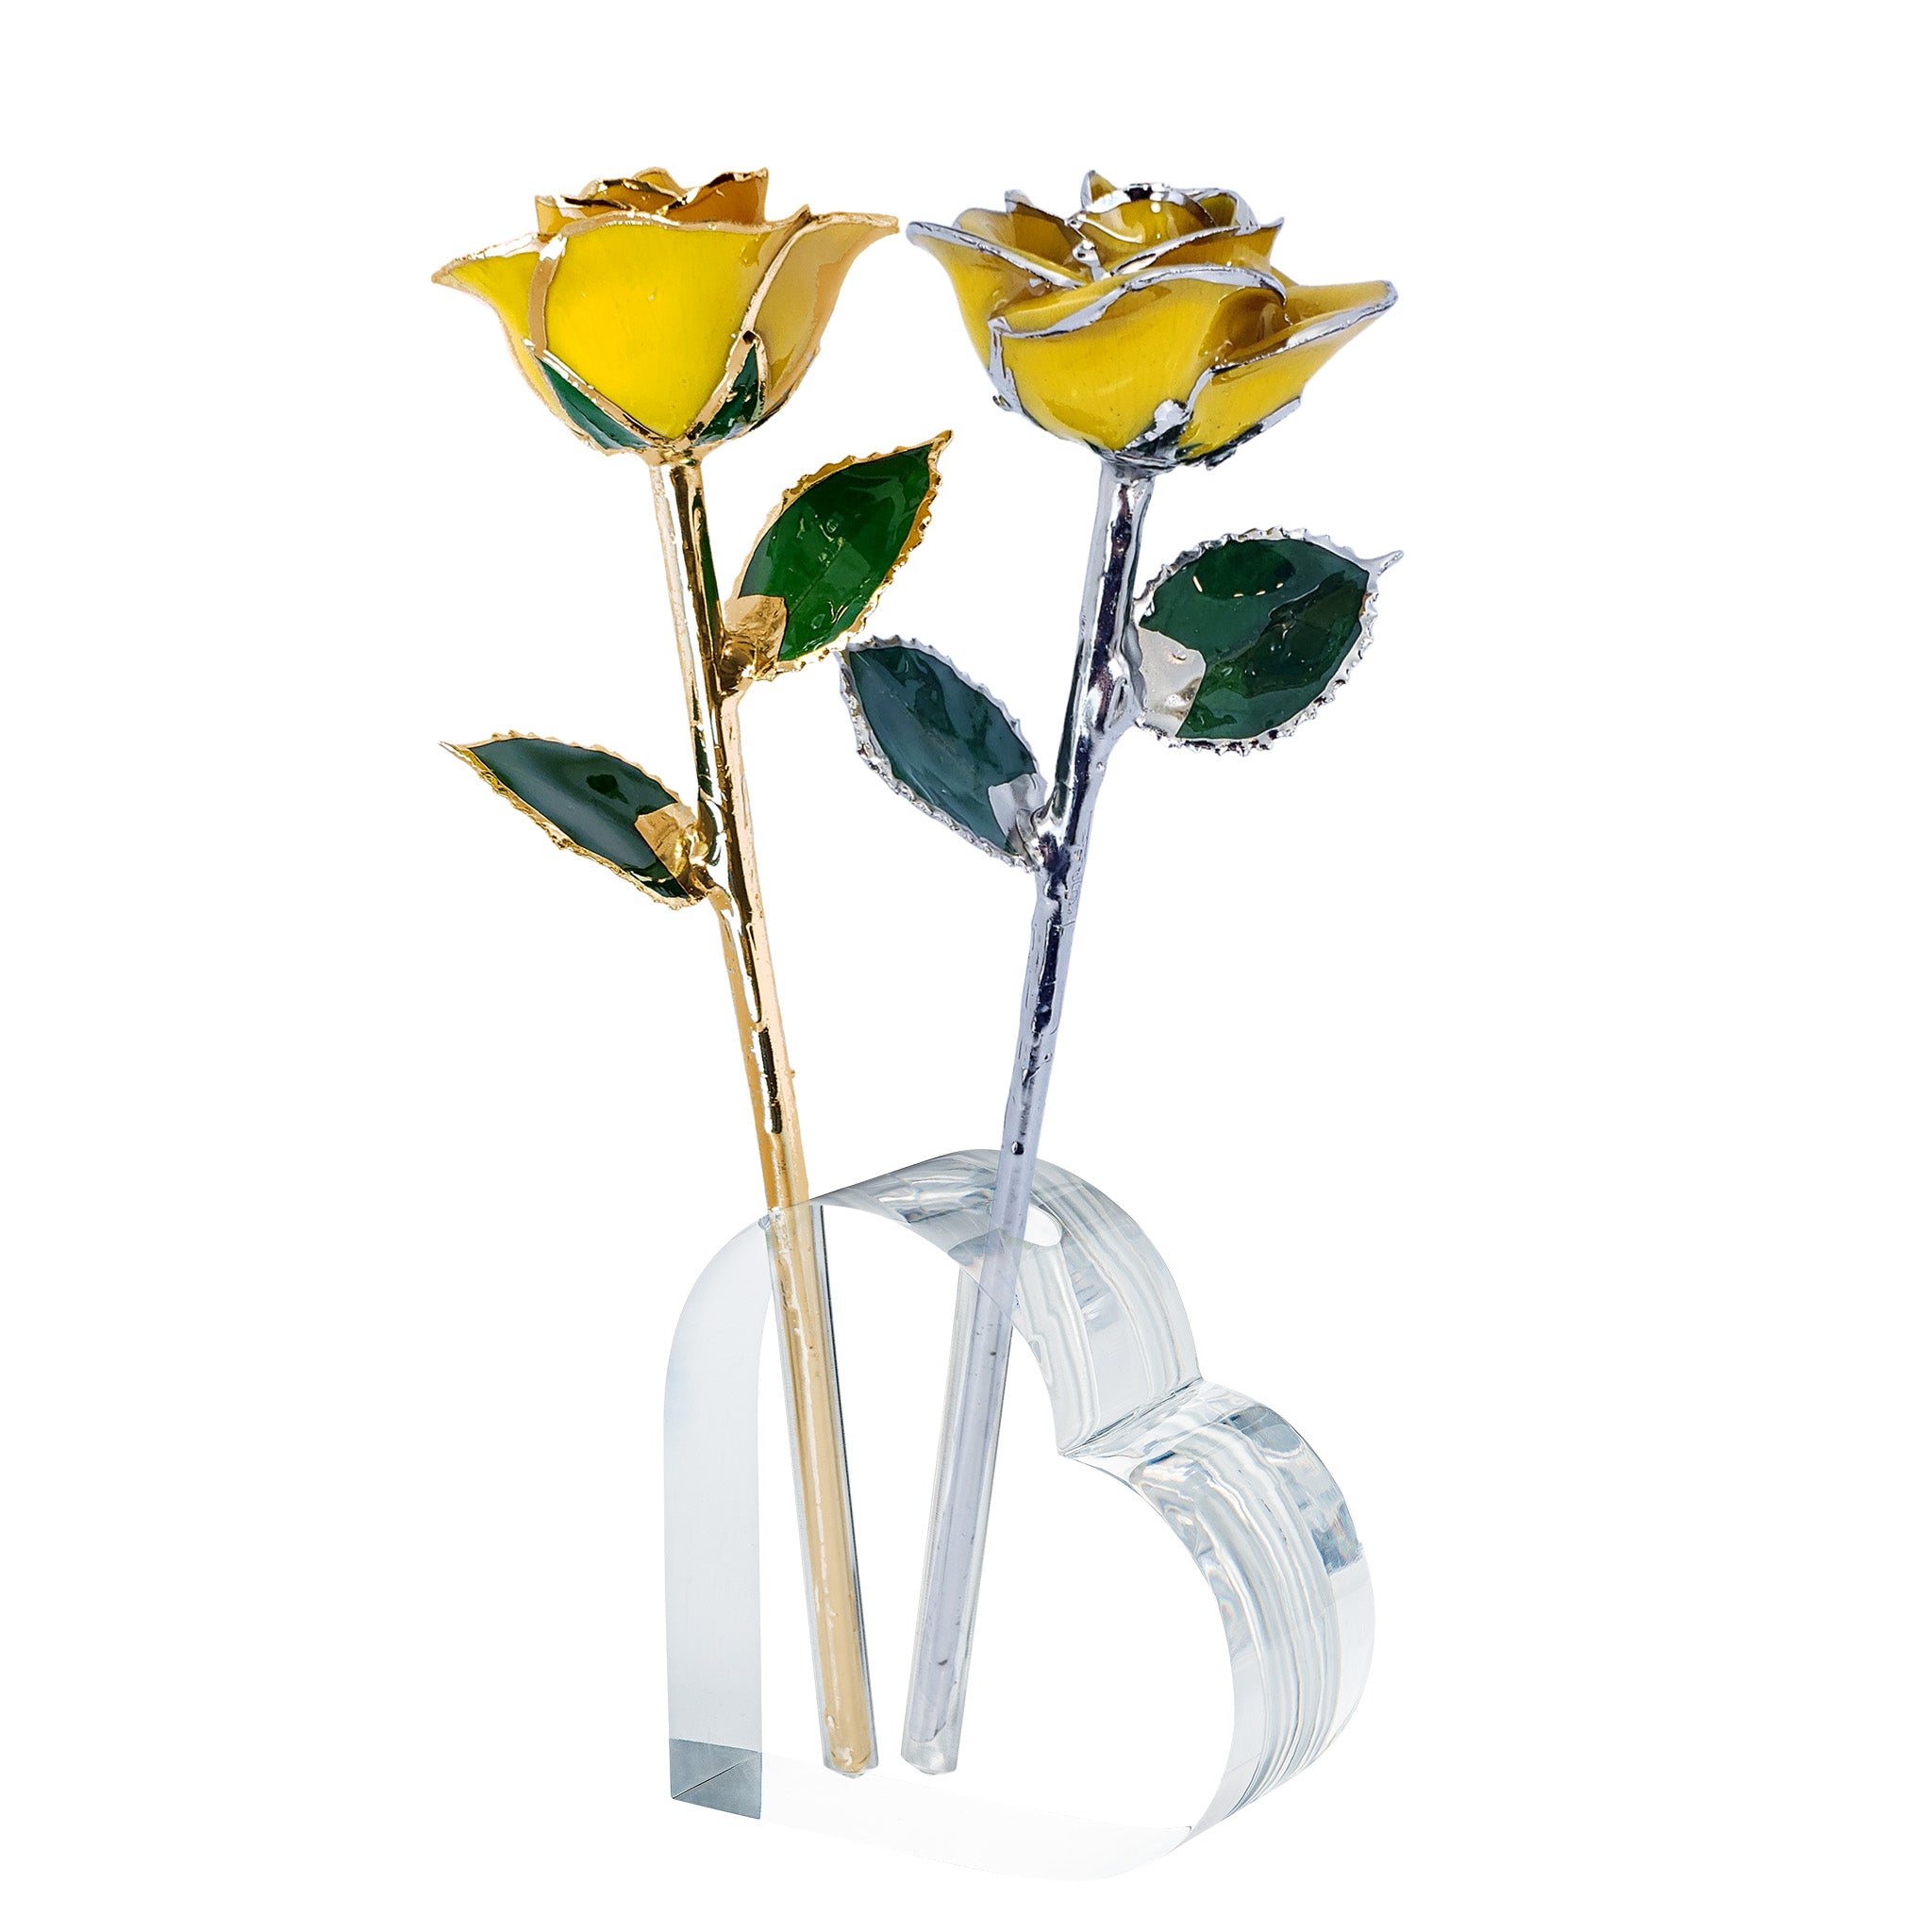 Forever Rose Acrylic Heart Vase Combo